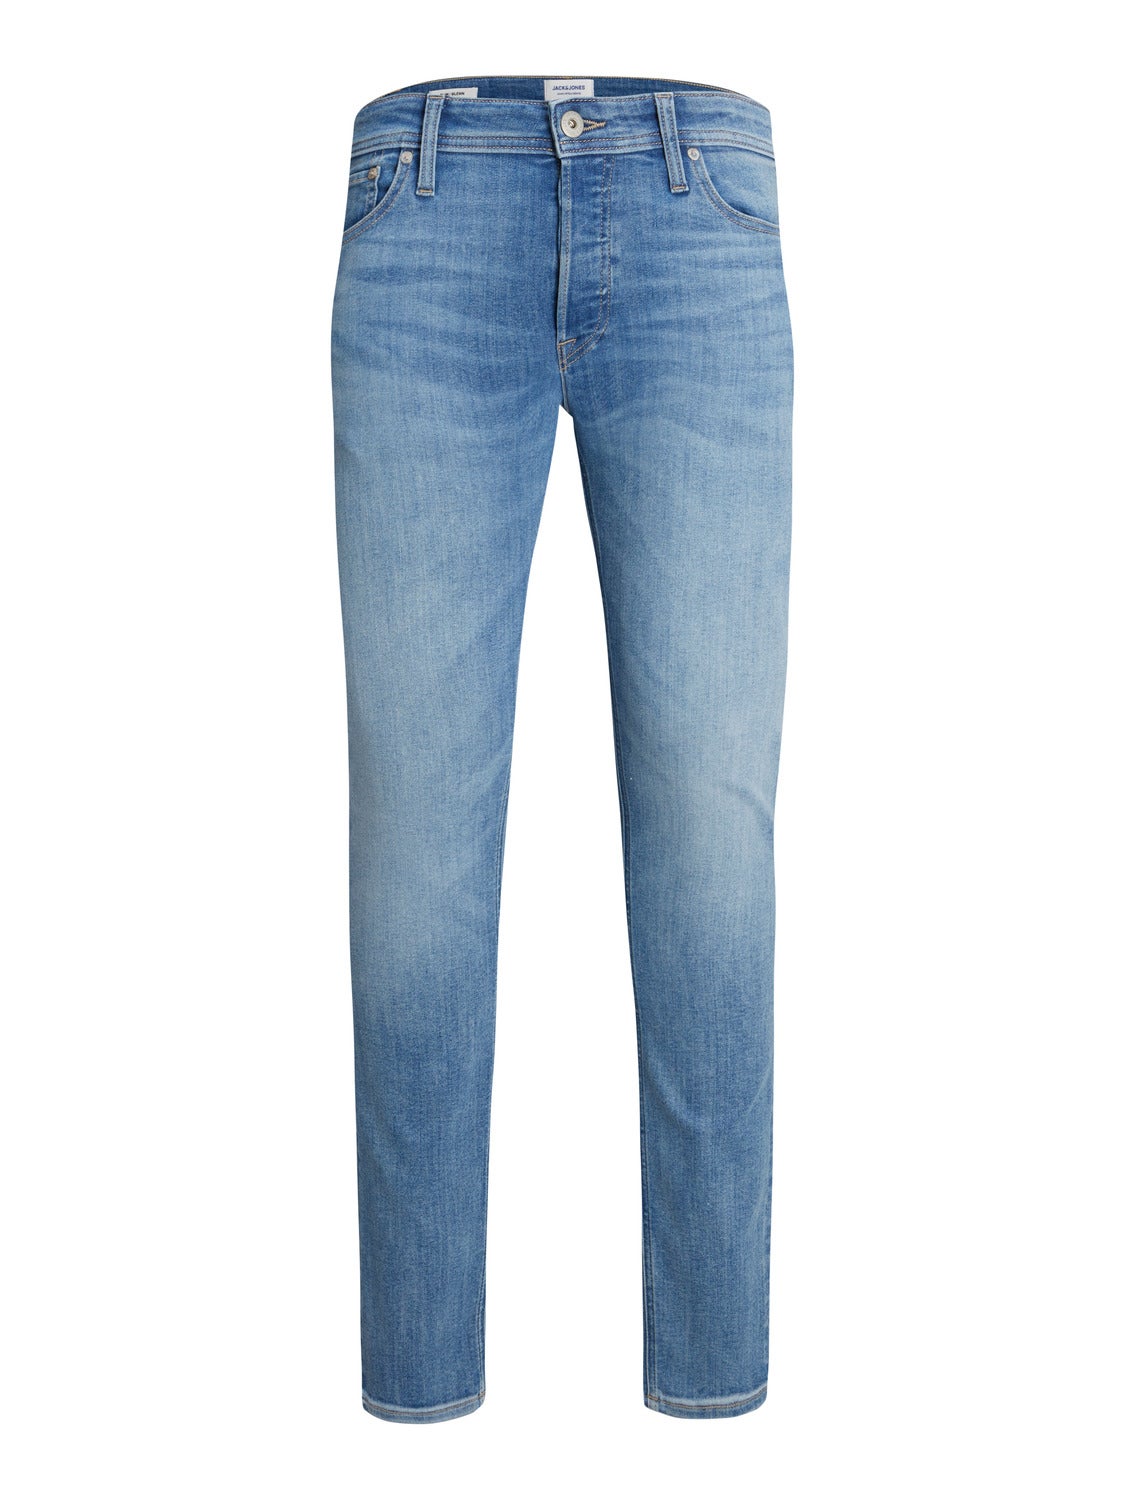 DAMEN Jeans Basisch Zara Flared jeans Blau 32 Rabatt 80 % 